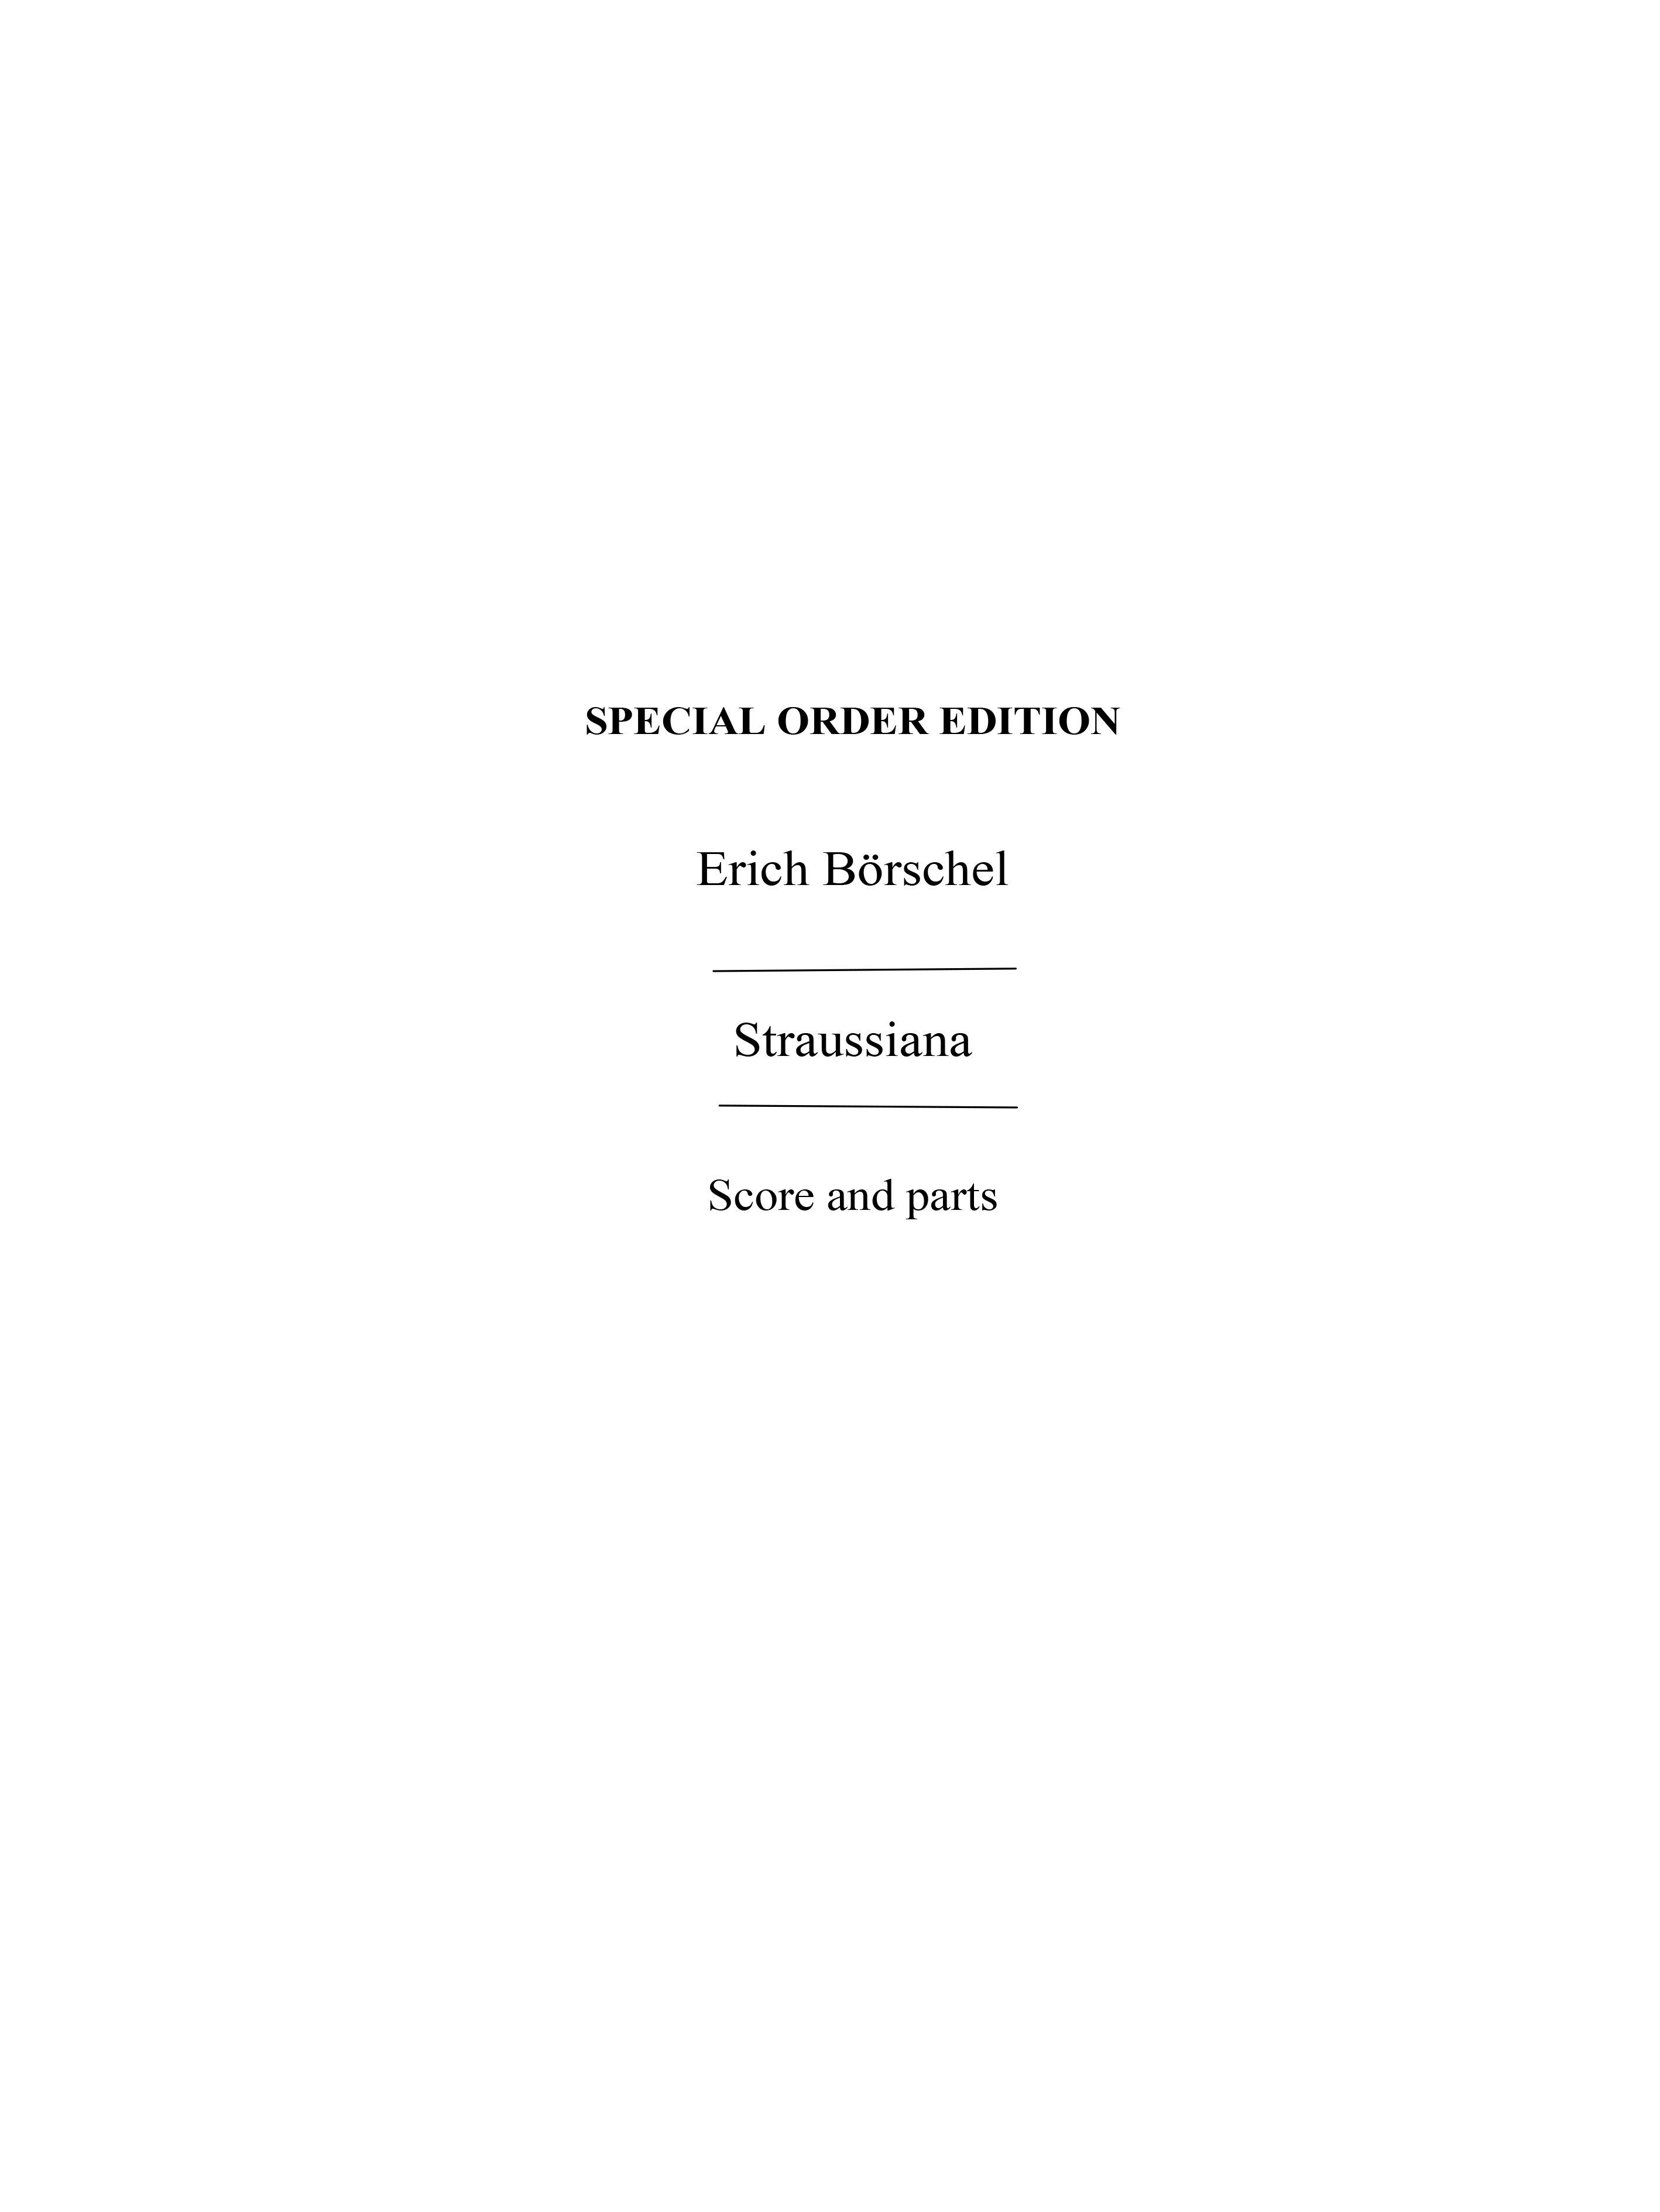 Erich Börschel: Borschel  E Straussiana: Orchestra: Score and Parts